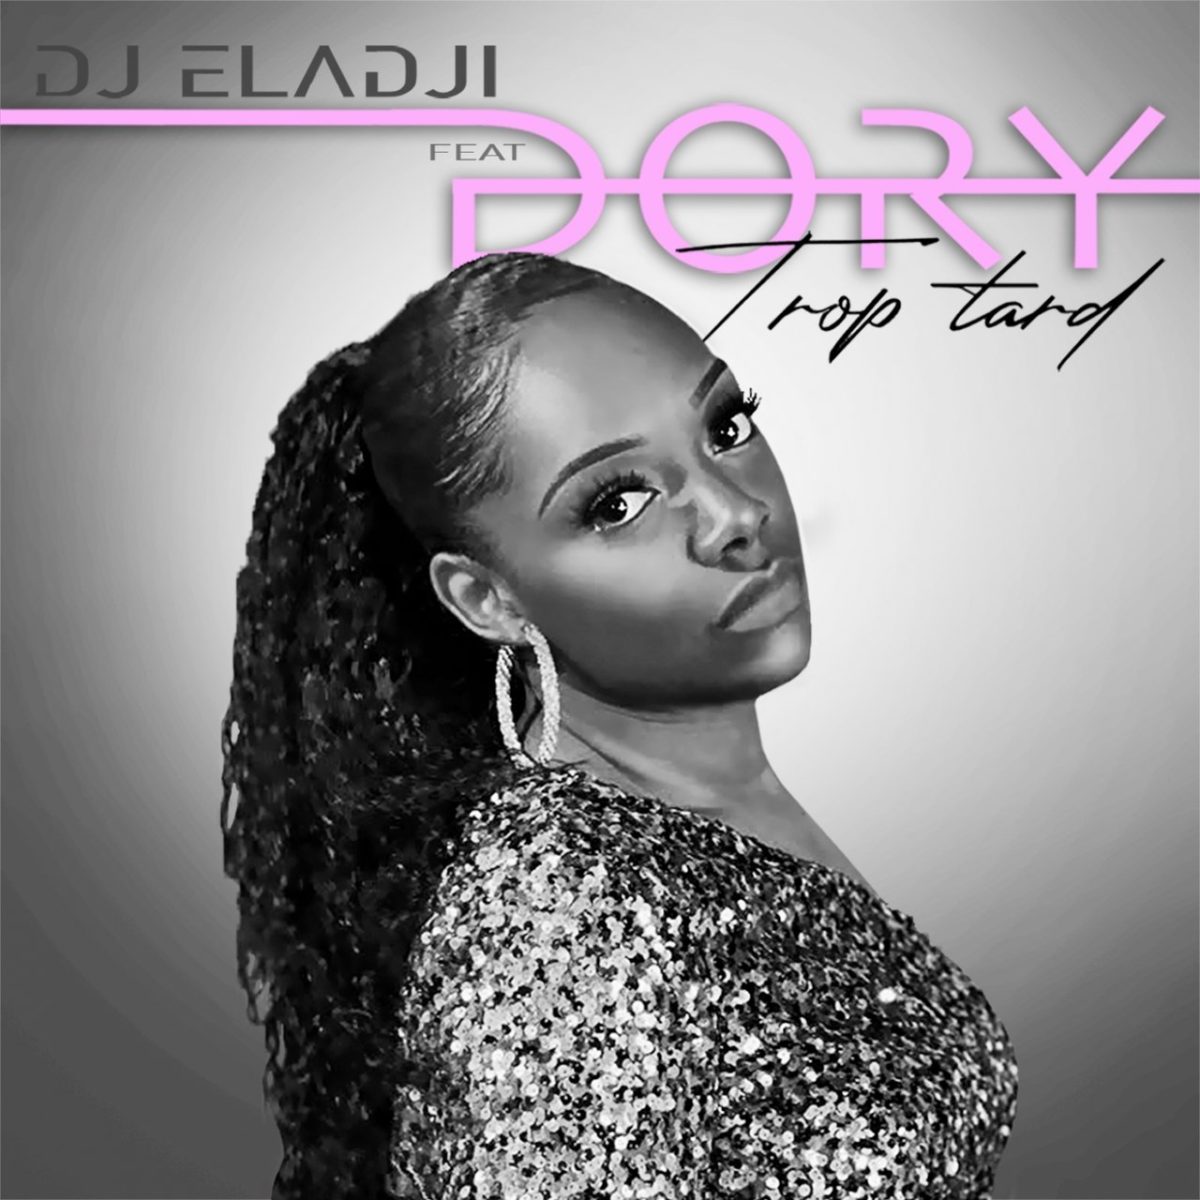 DJ Eladji - Trop Tard (ft. Dory) (Cover)